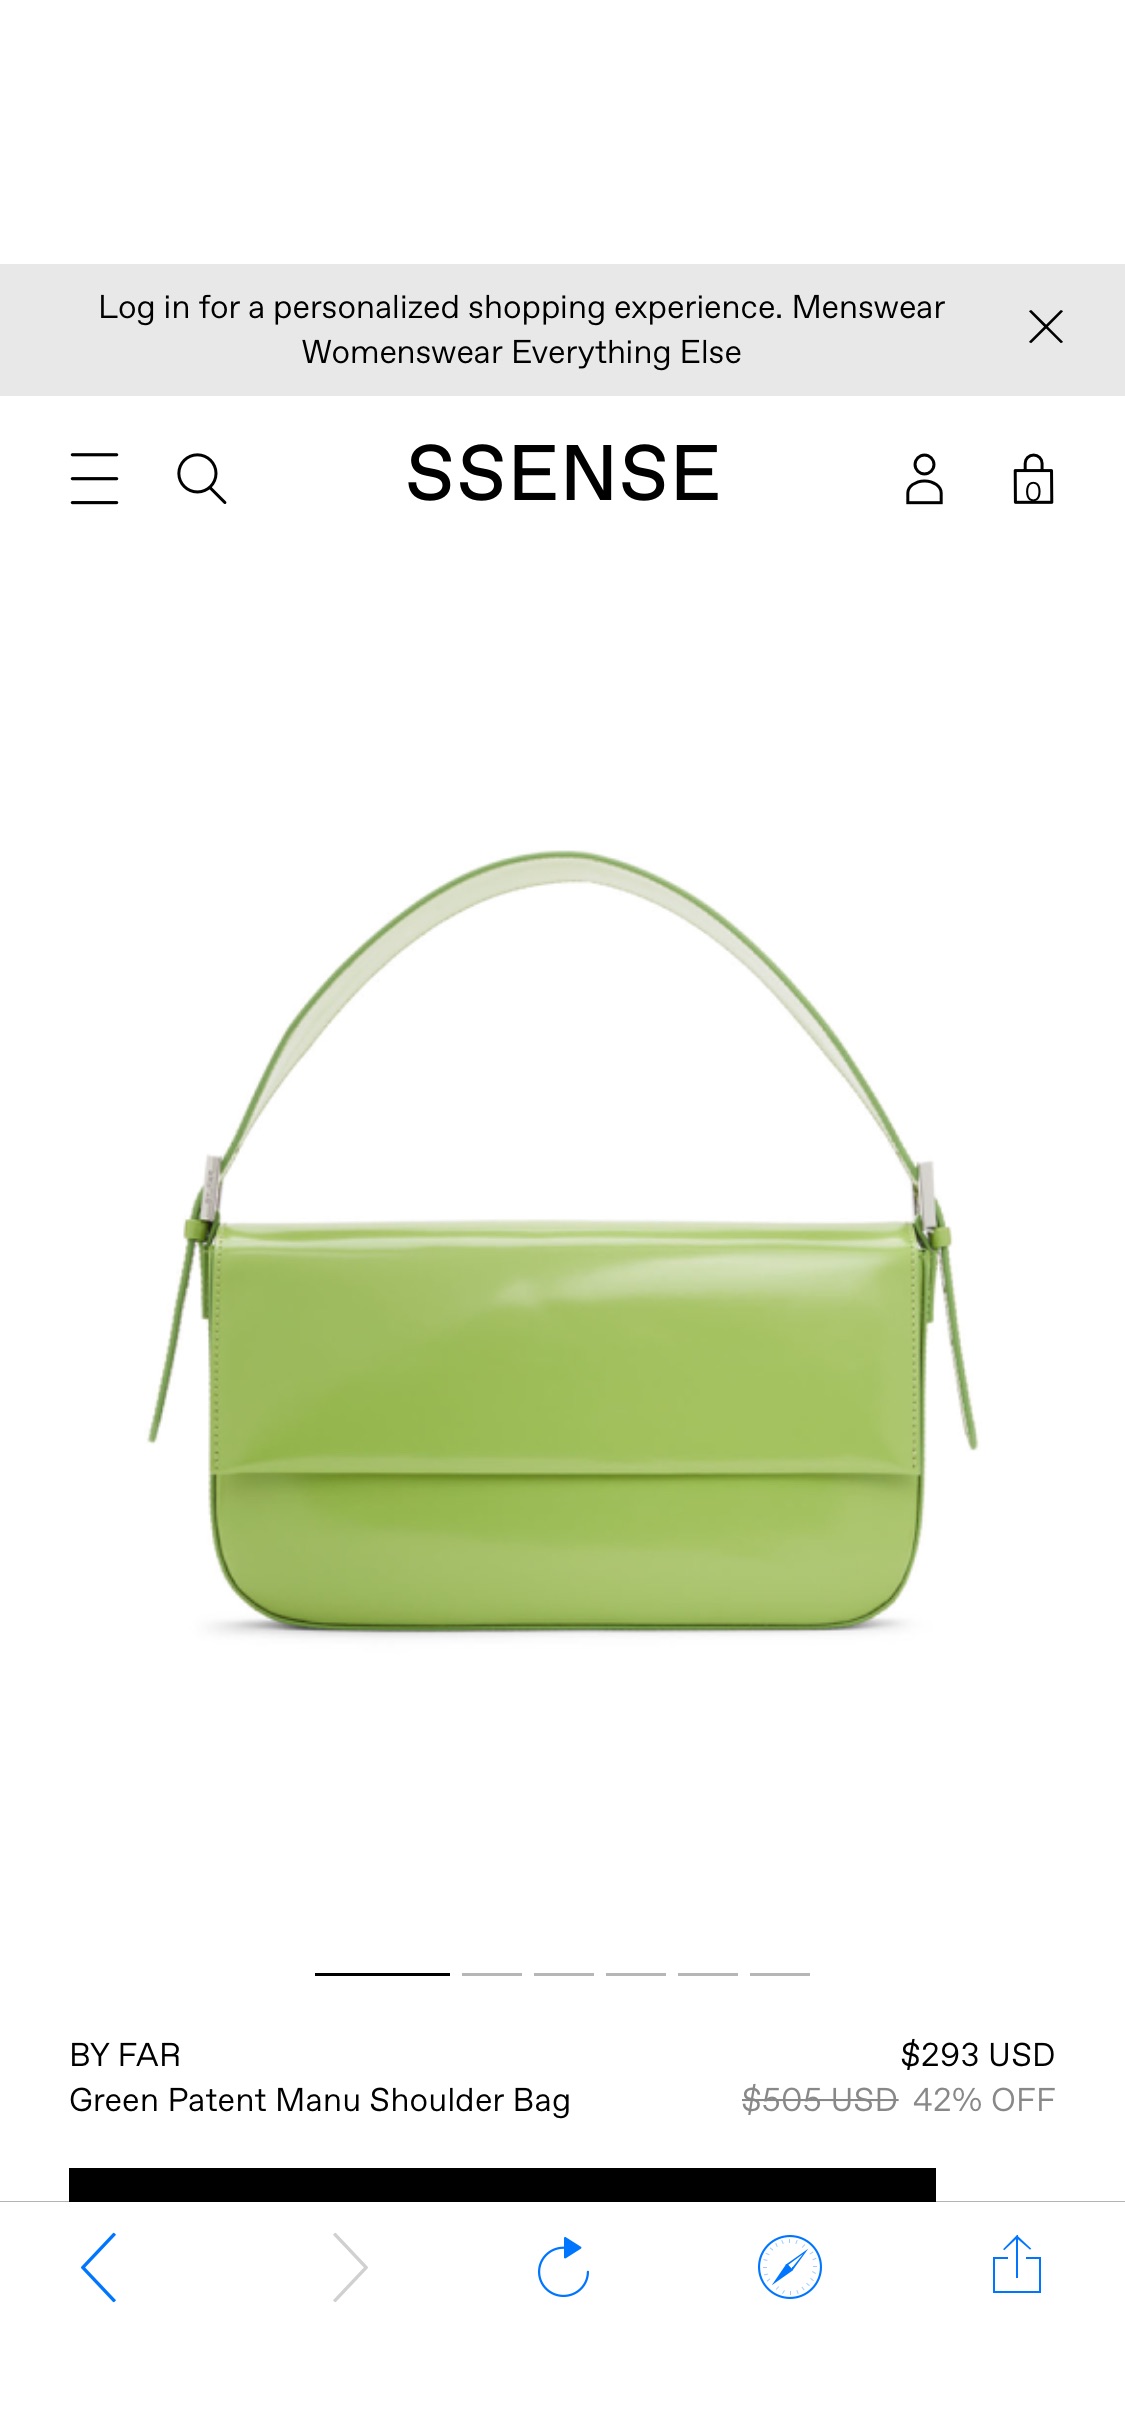 Green Patent Manu Shoulder Bag by BY FAR on Sale牛油果绿单肩包